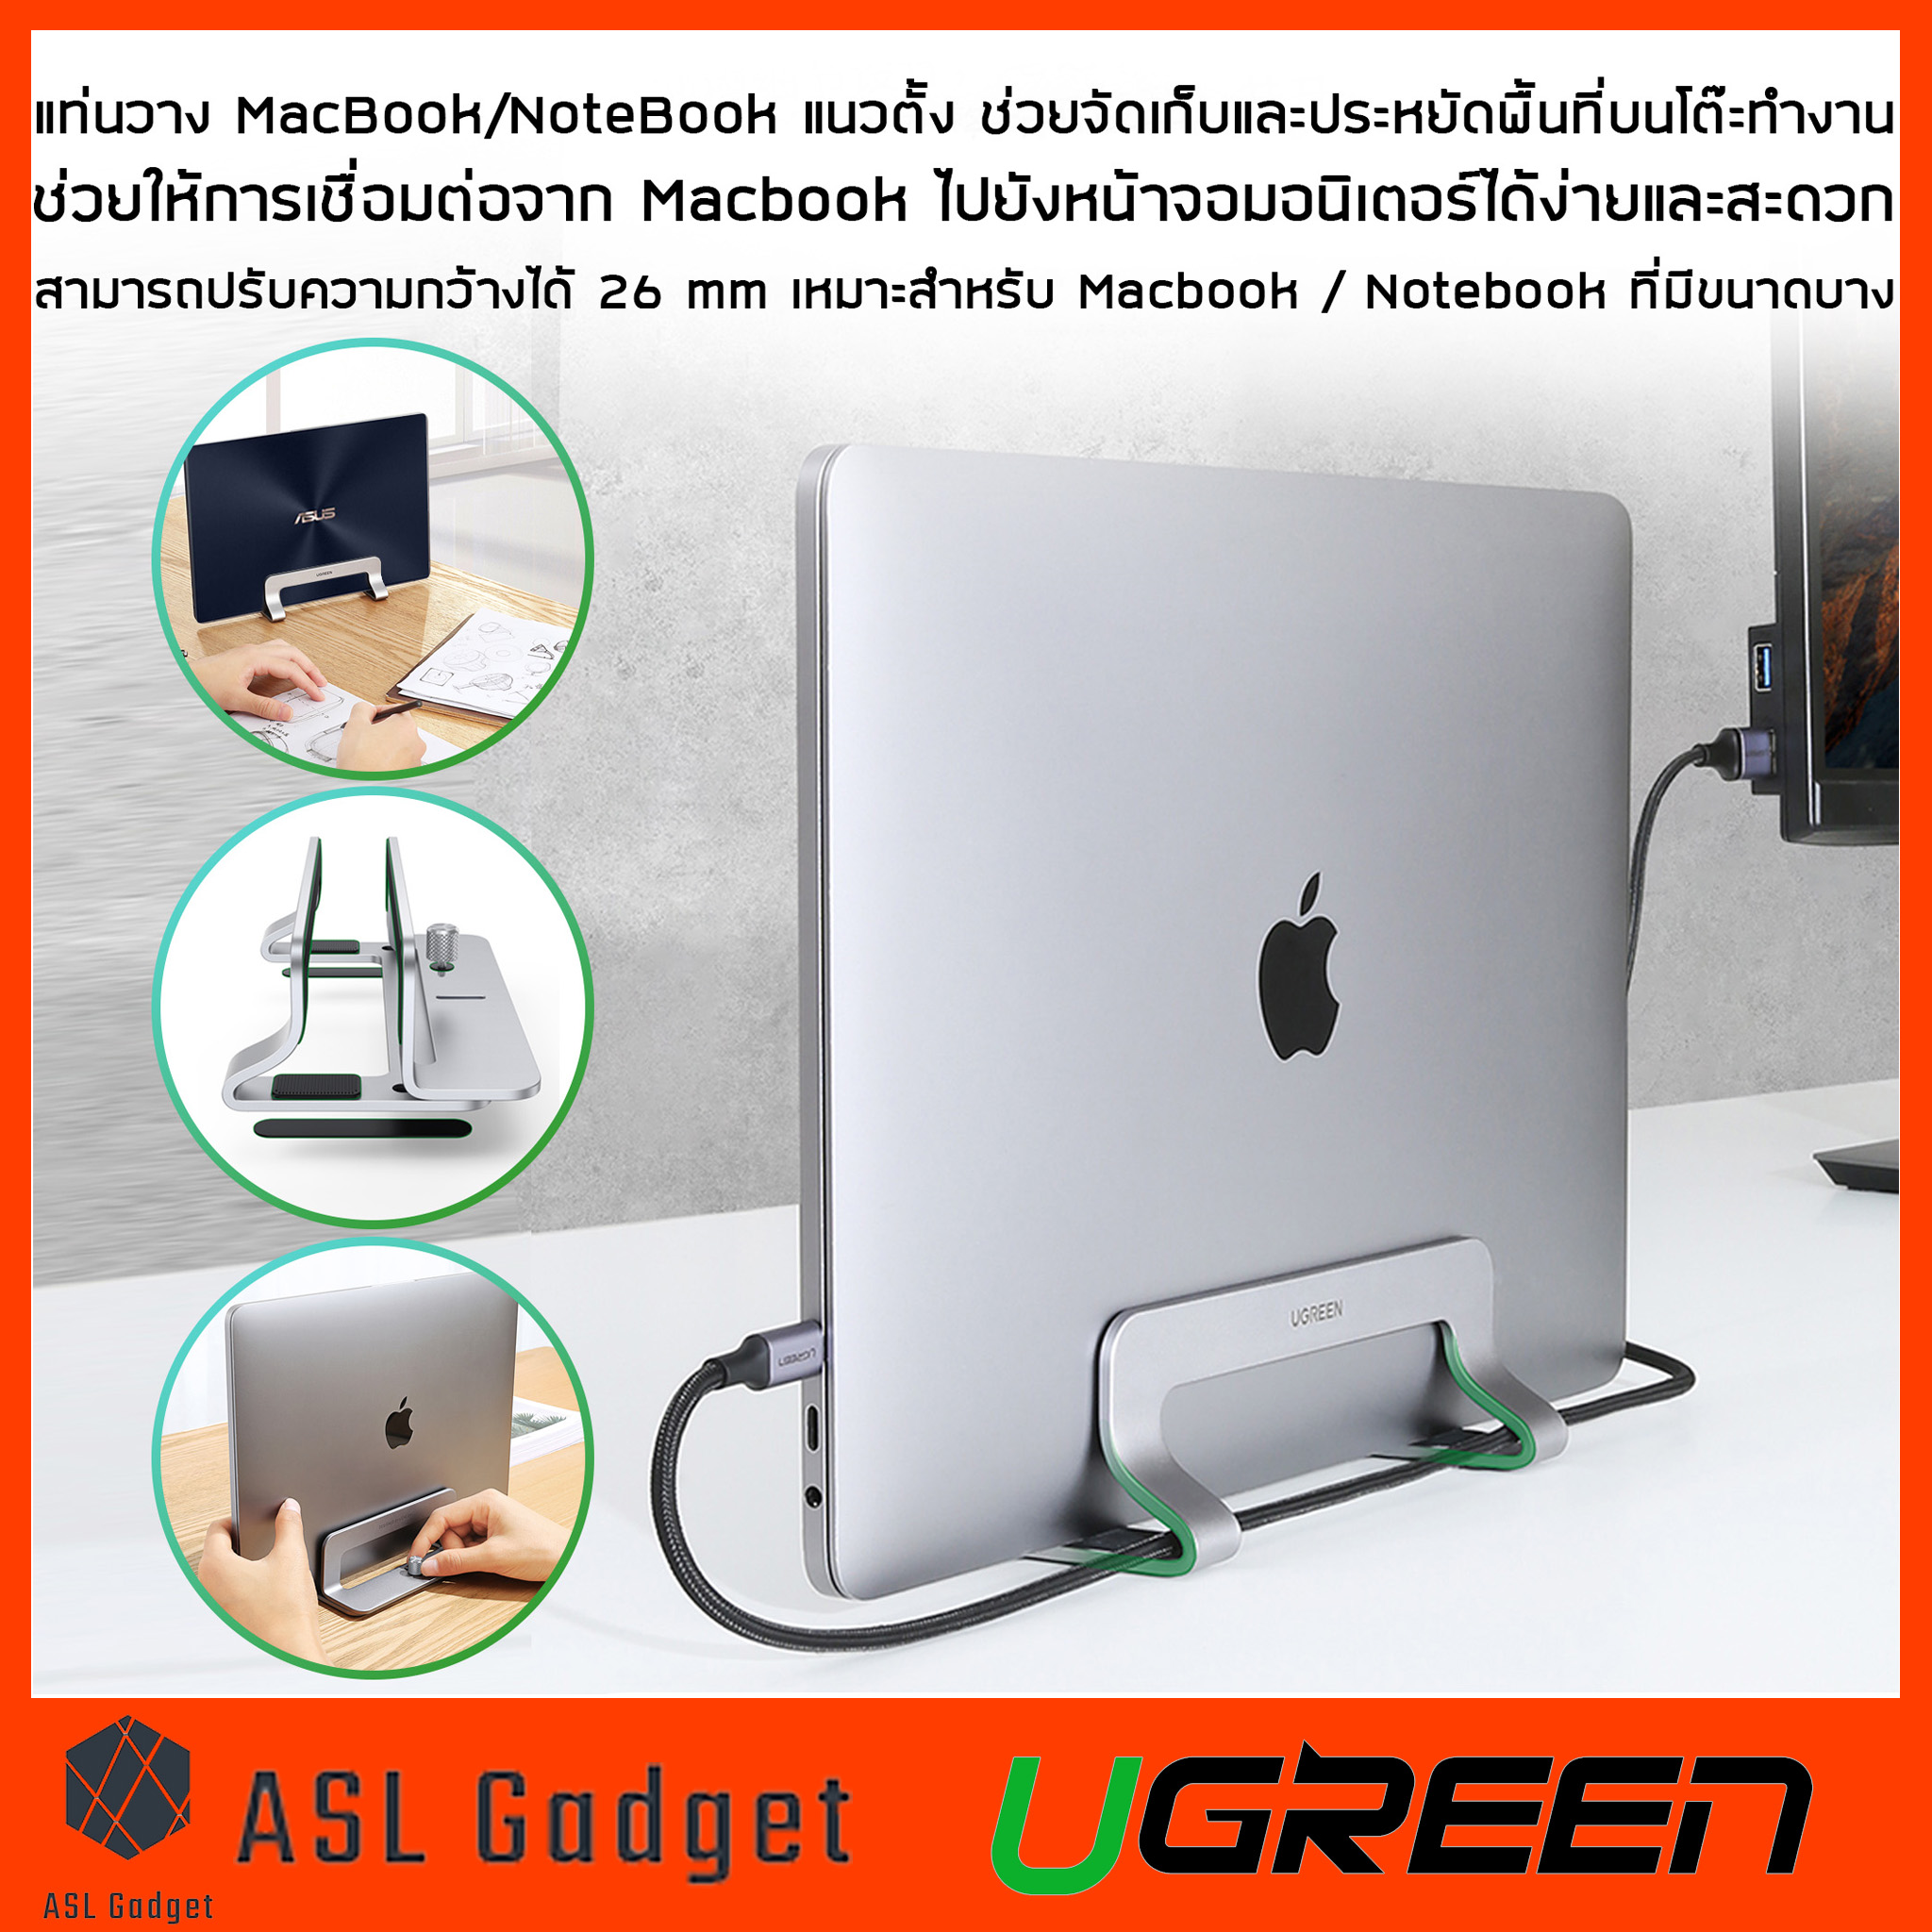 Ugreen แท่นวาง MacBook / NoteBook แนวตั้ง ช่วยจัดเก็บและประหยัดพื้นที่บนโต๊ะทำงาน สามารถปรับความกว้างได้ 26 mm